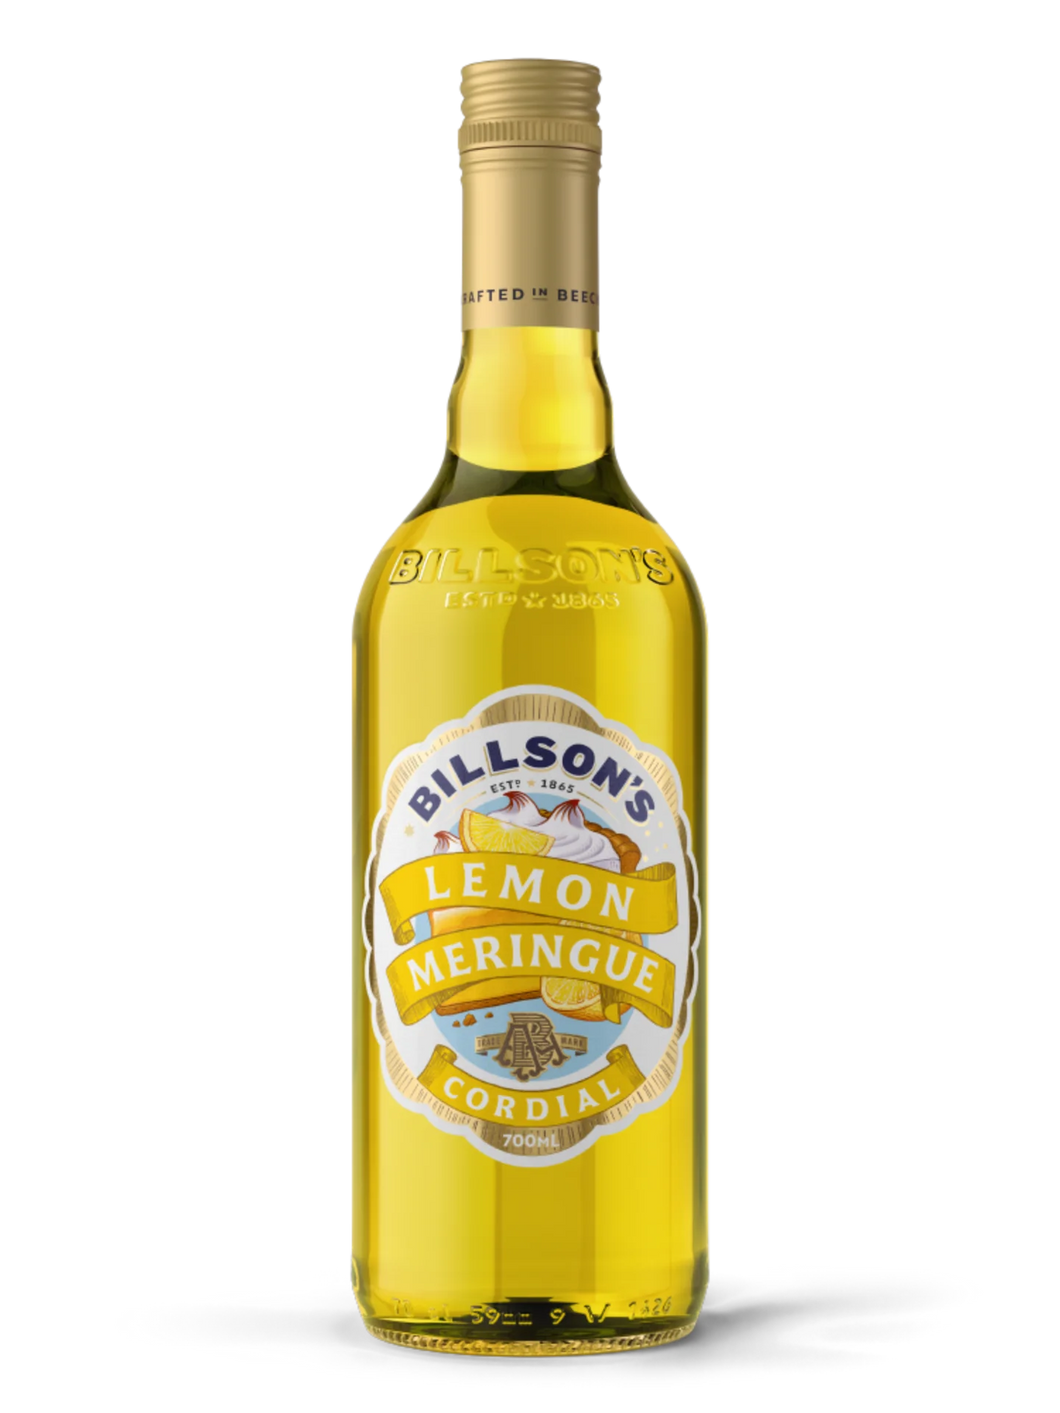 Lemon Meringue Cordial